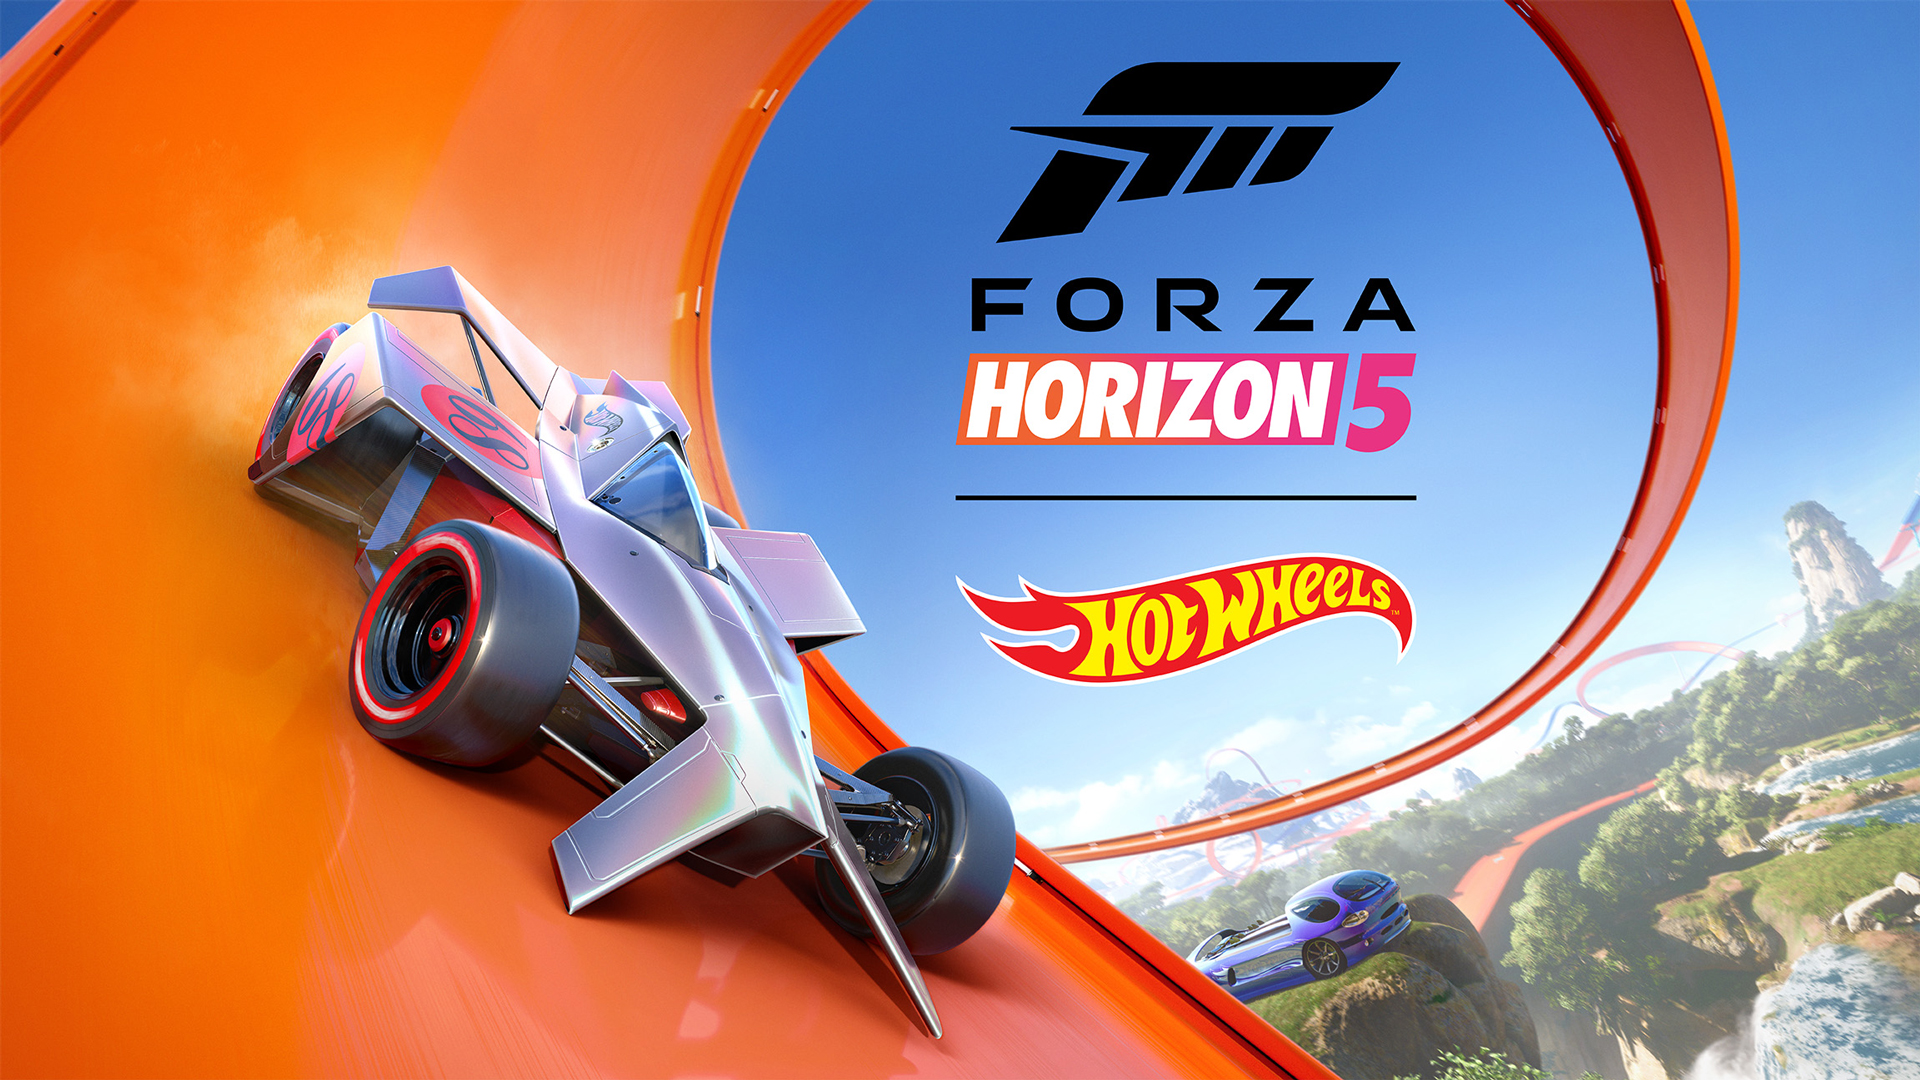 Forza Horizon 3 Unlocking Hot Wheels DLC Expansion Pack 